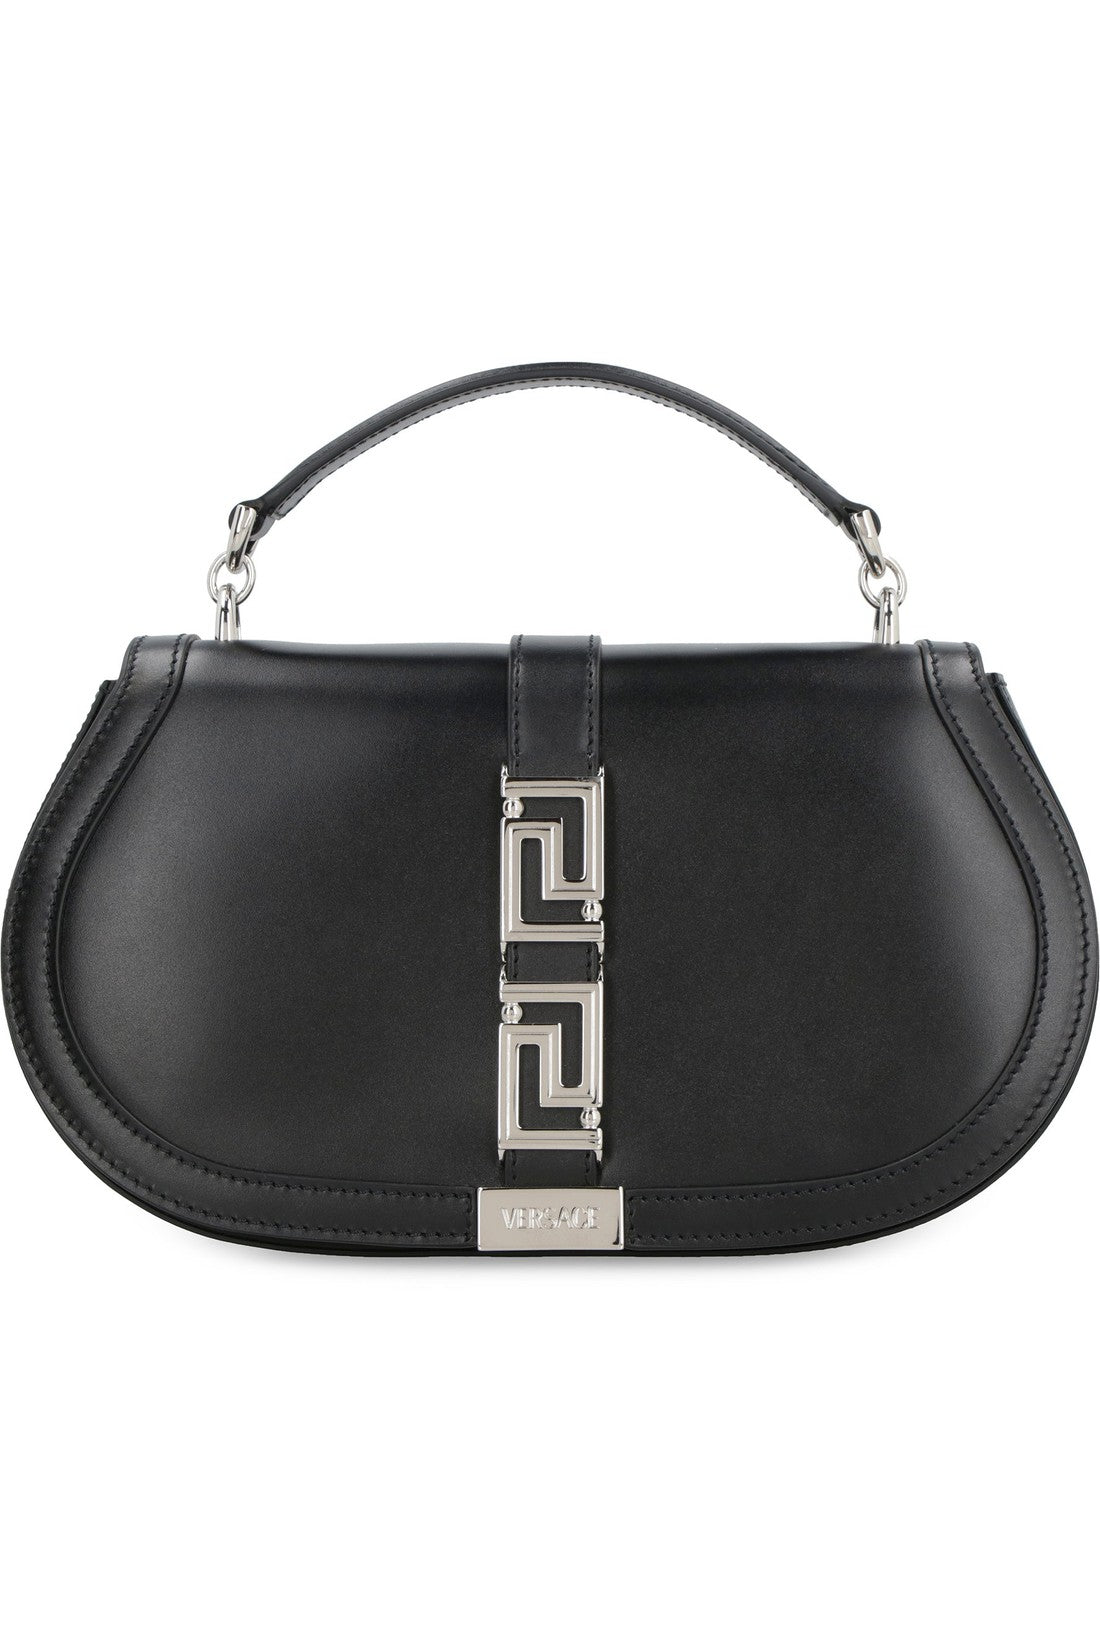 Versace-OUTLET-SALE-Greca Goddess leather crossbody bag-ARCHIVIST